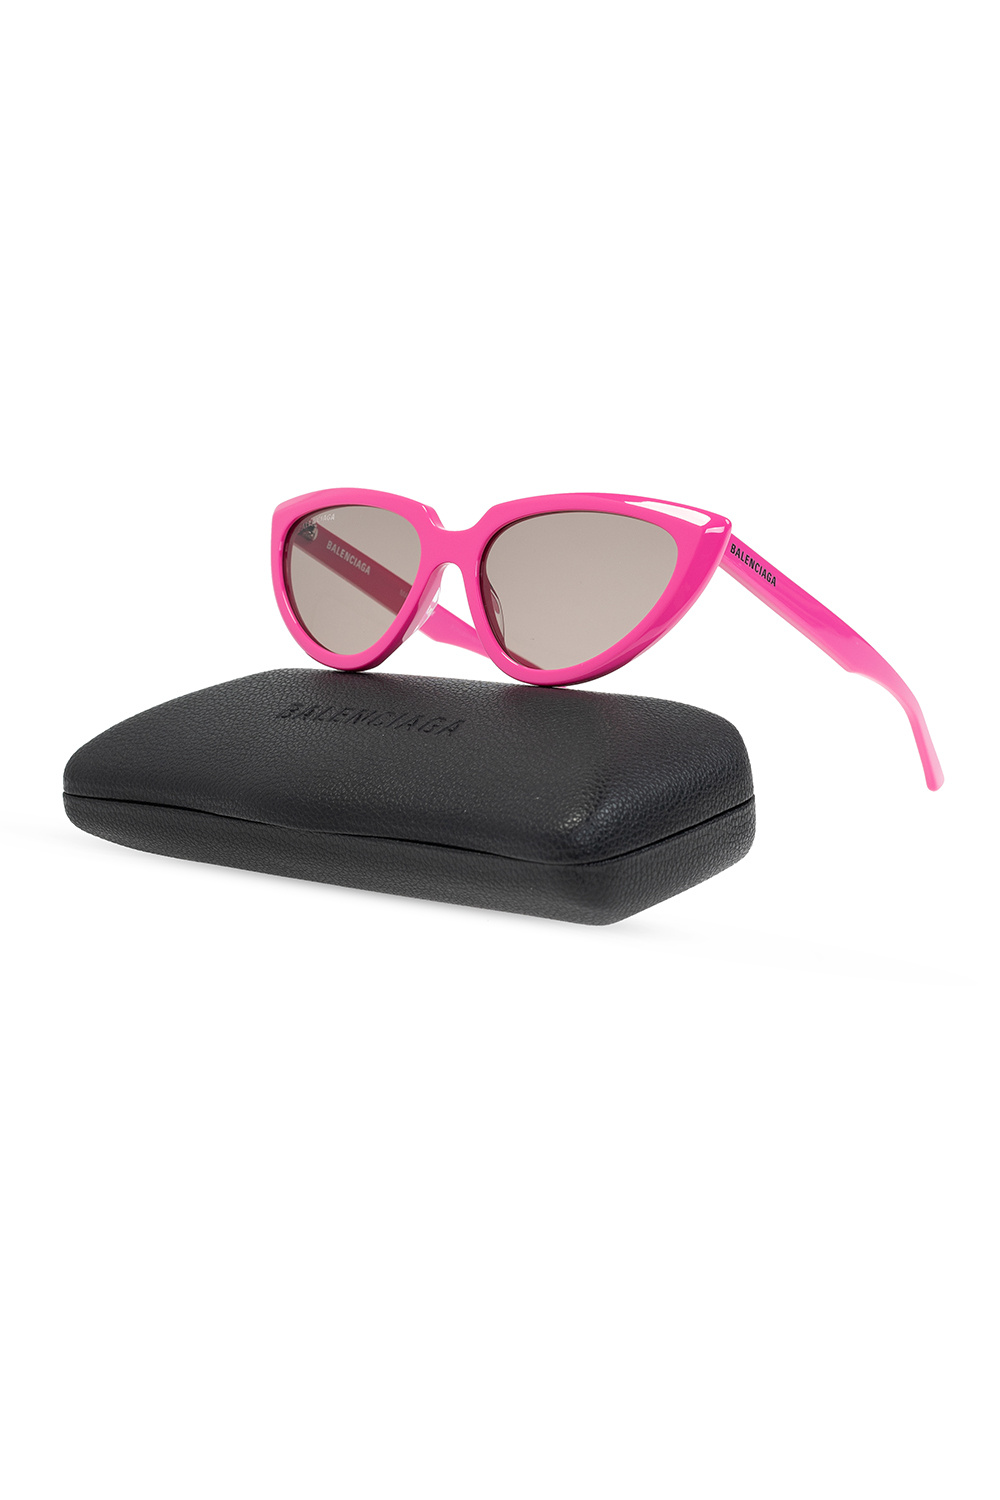 Balenciaga vogue eyewear gigi hadid capsule low frame sunglasses item